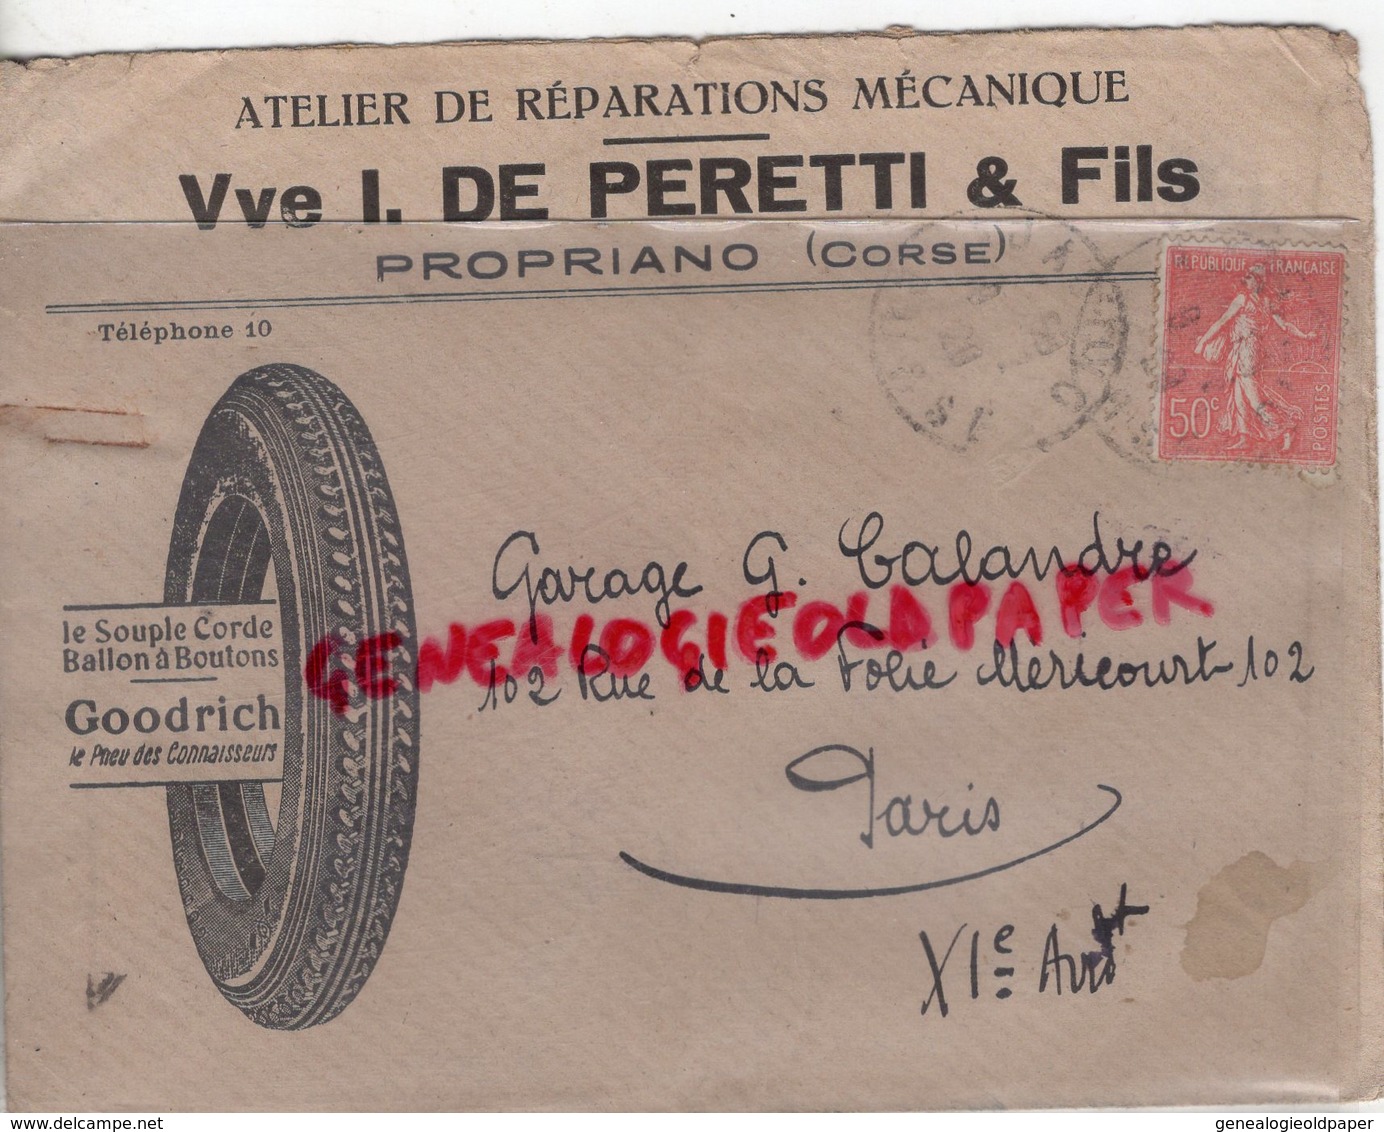 20- PROPRIANO- RARE ENVELOPPE VEUVE I. DE PERETTI & FILS- GARAGE ATELIER REPARATIONS MECANIQUE-PNEU GOODRICH-1920 - Automobil